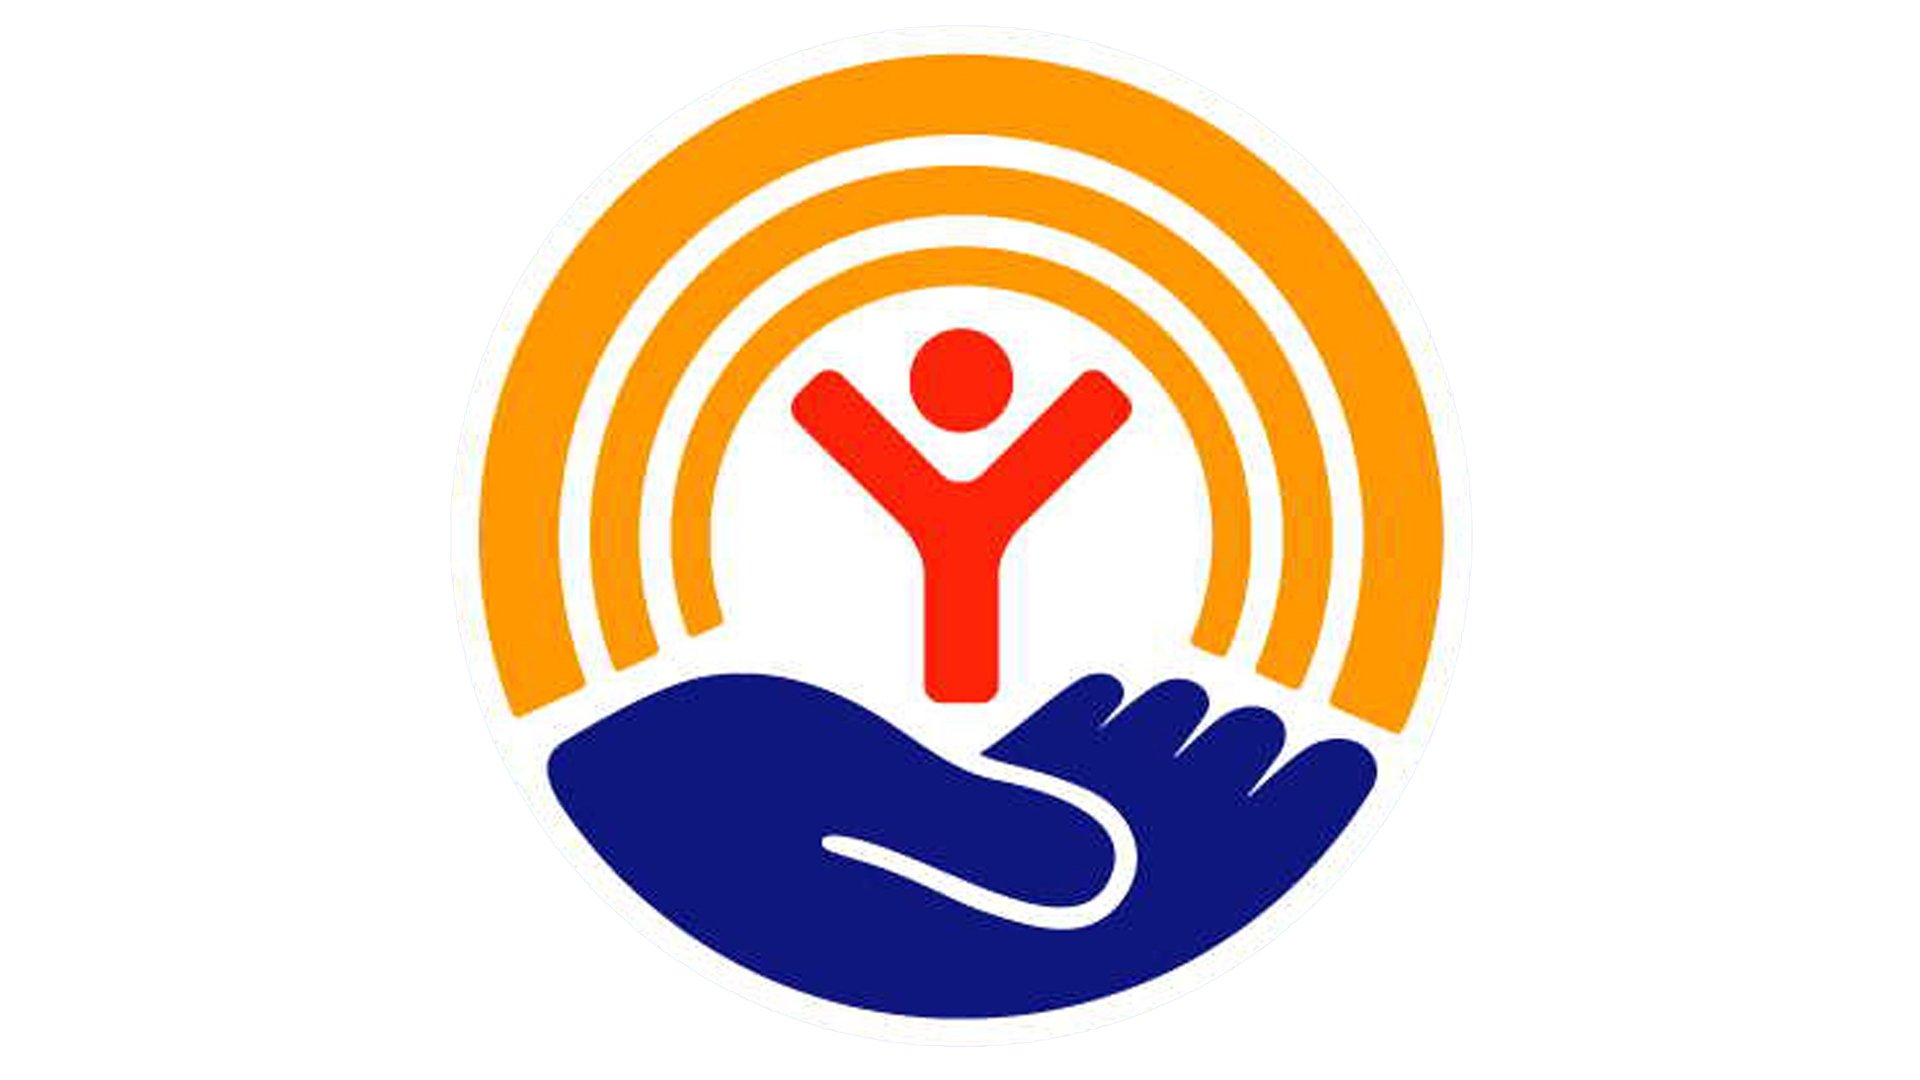 united hands logo